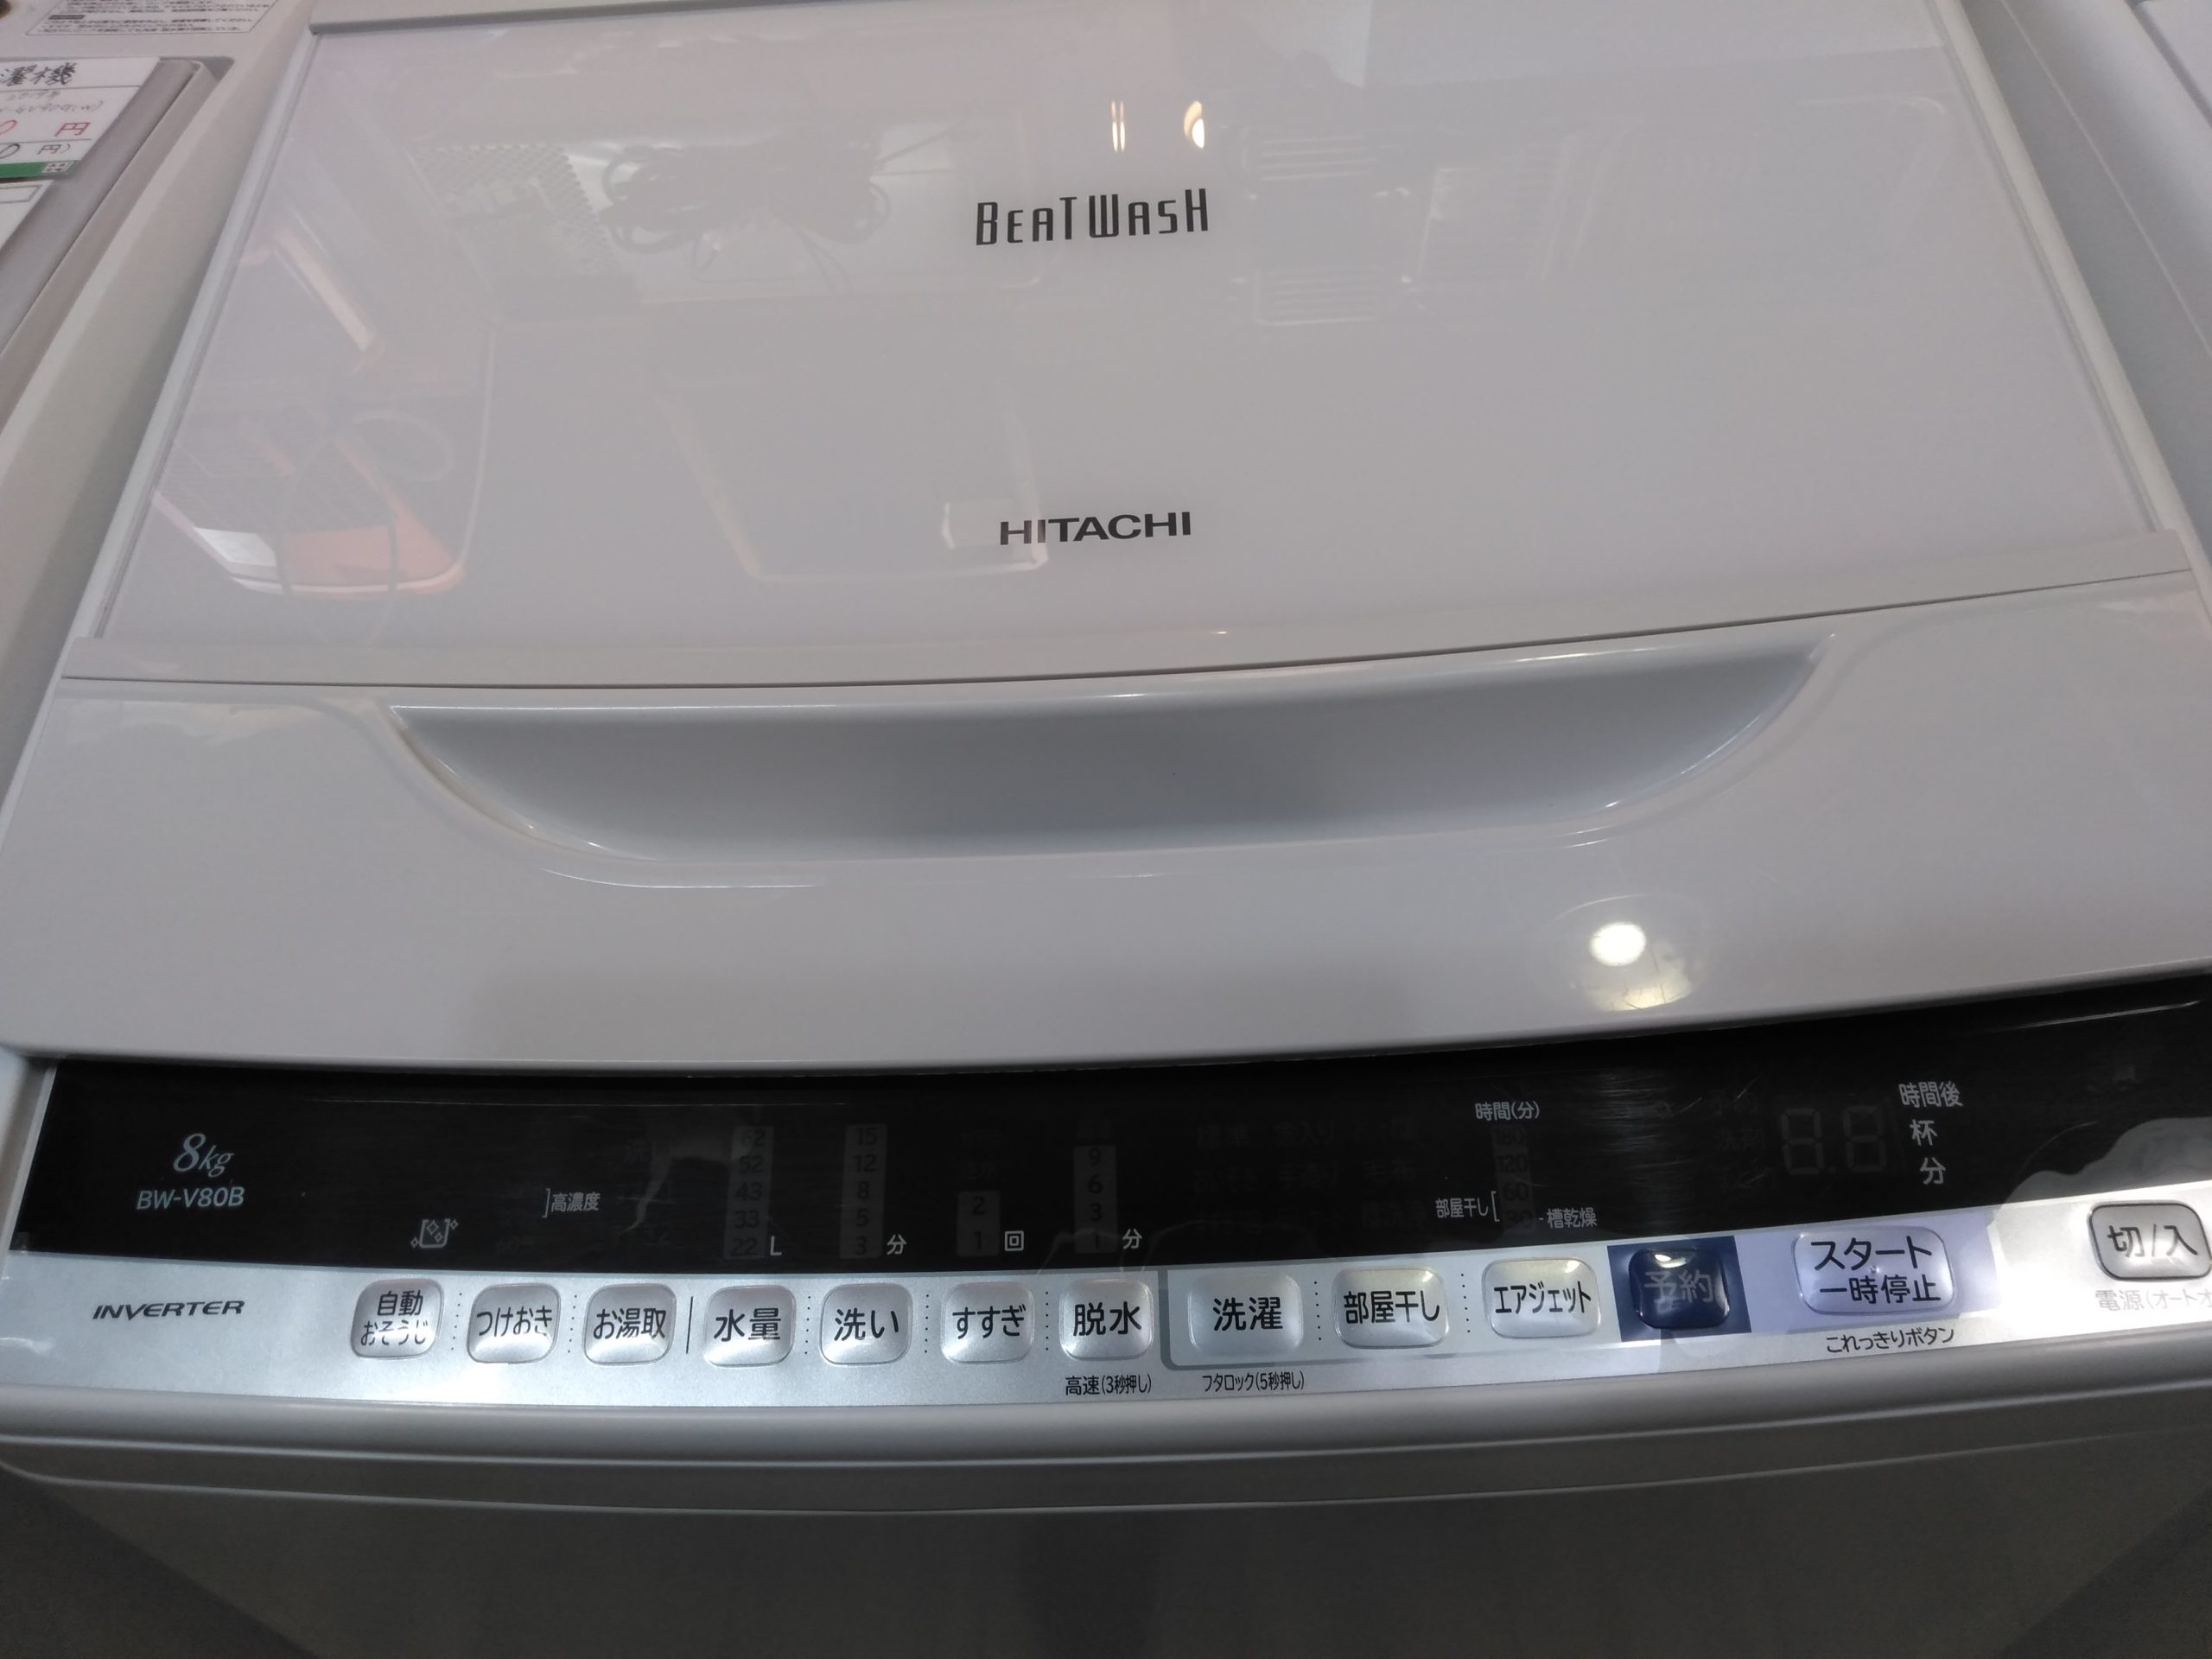 HITACHI 日立 ビートウォッシュ 8㎏ 2018年製 BW-V80B 全自動洗濯機買取しました。 | 愛知と岐阜のリサイクルショップ 再良市場